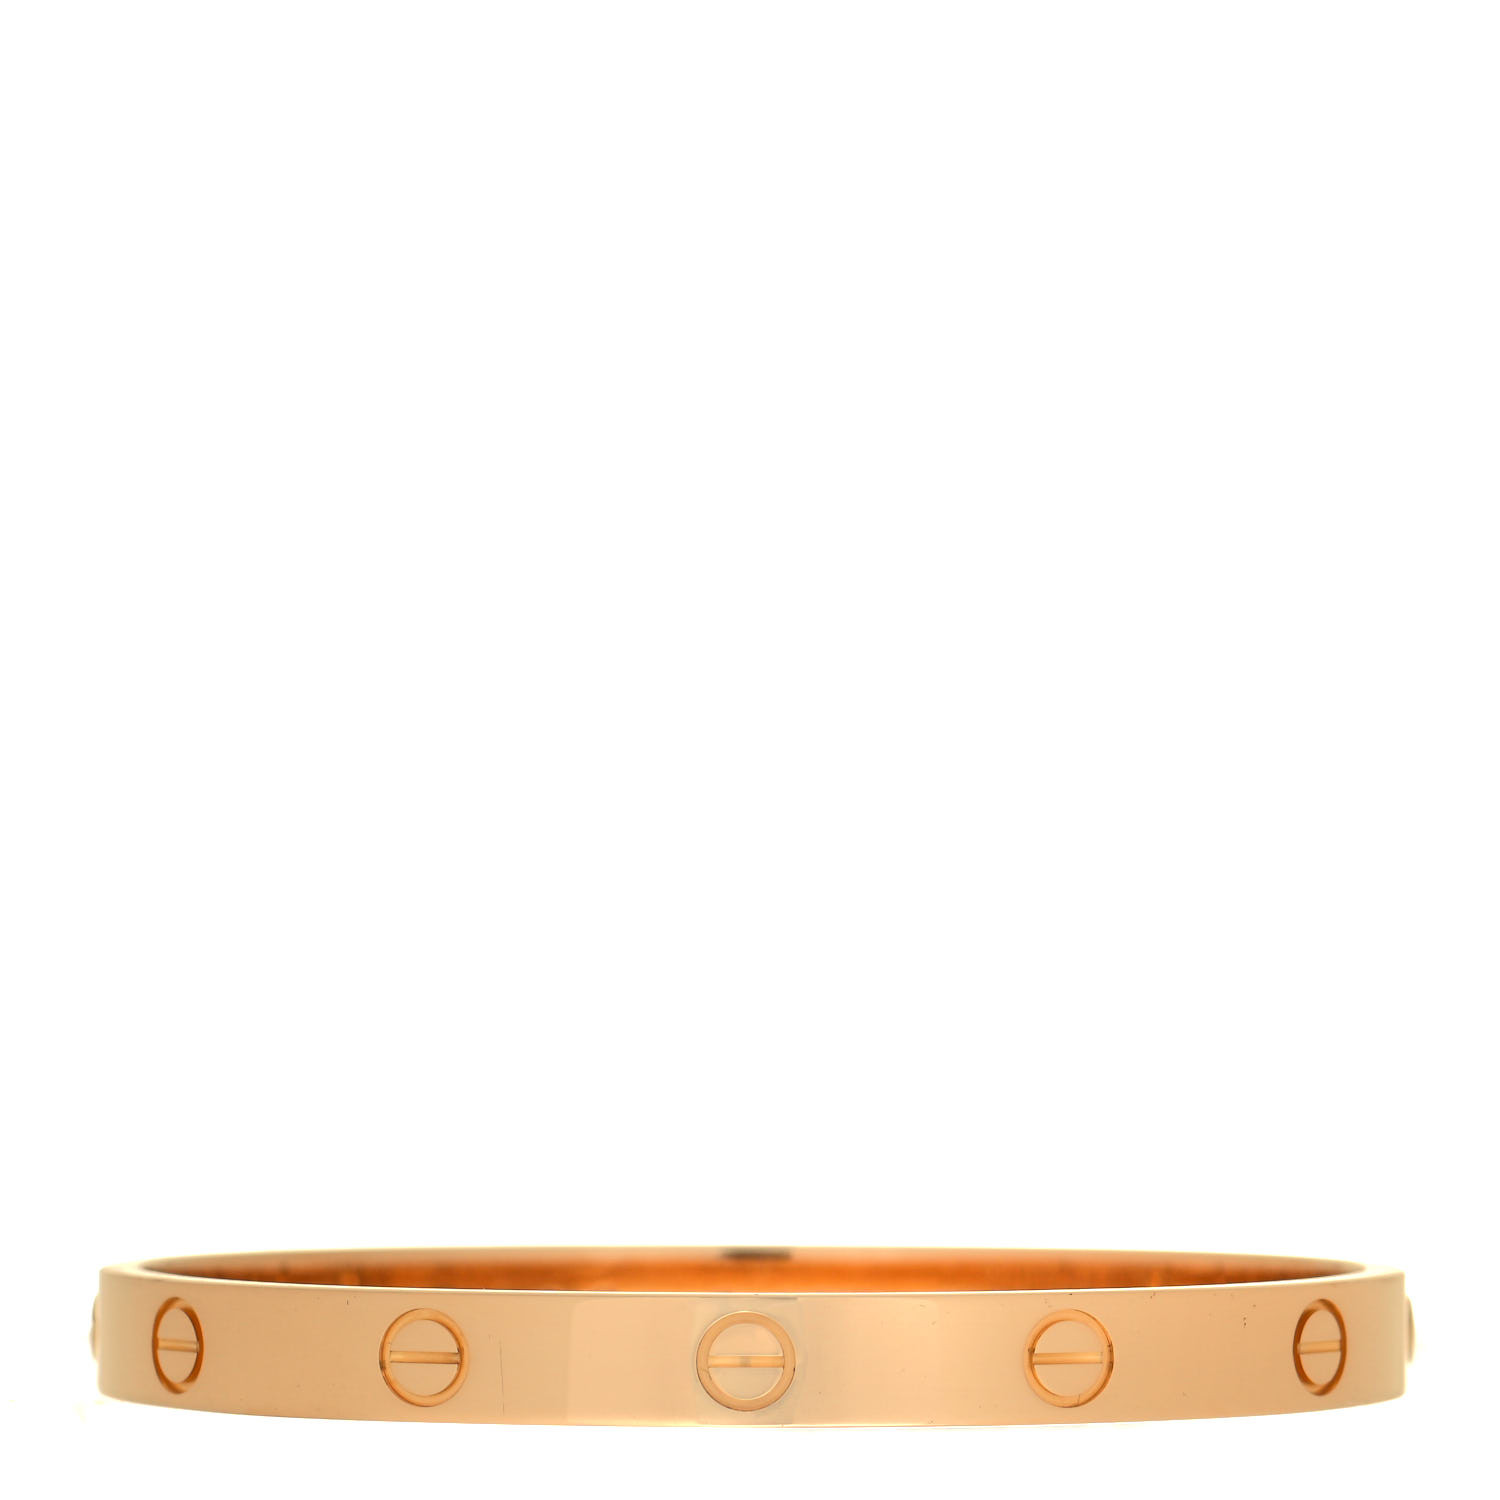 Cartier 18k Yellow Gold Love Bracelet 17 9359 Fashionphile